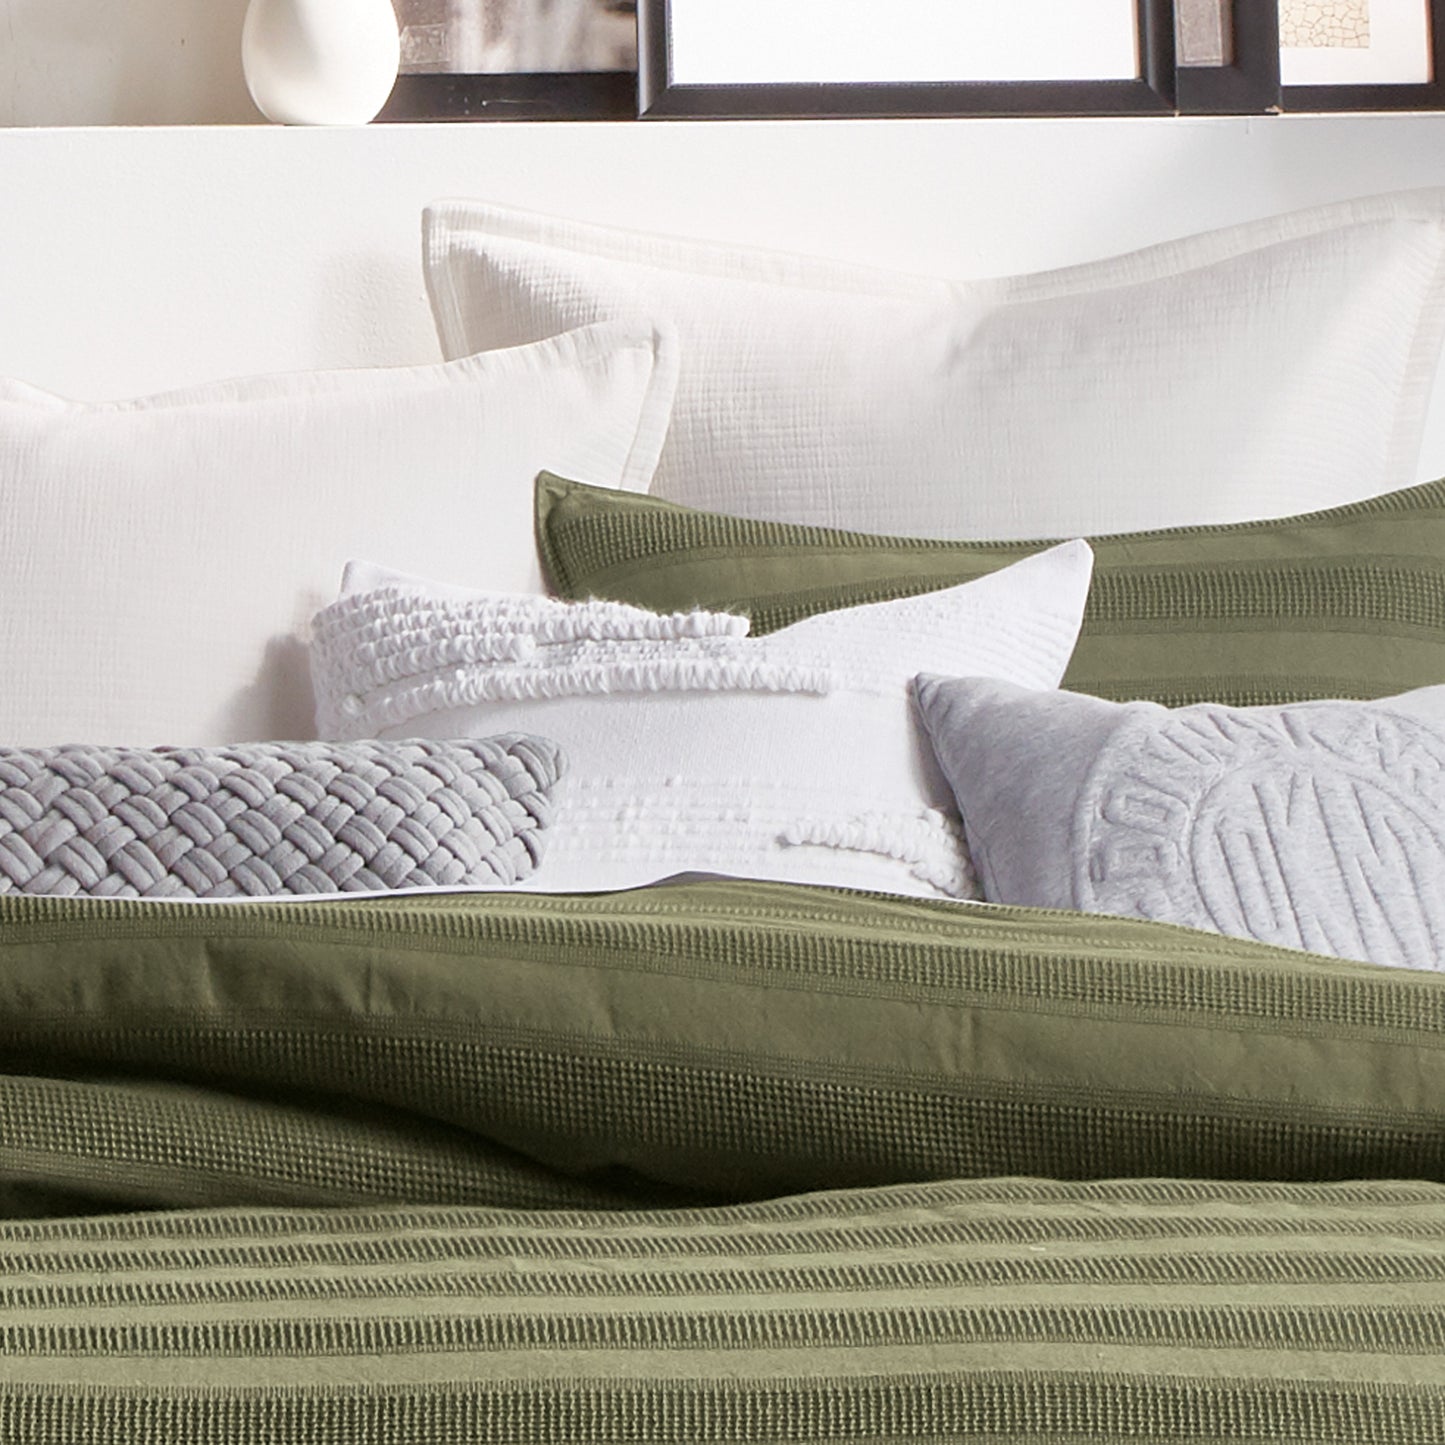 DKNY Textured Stripe Decorative Pillow